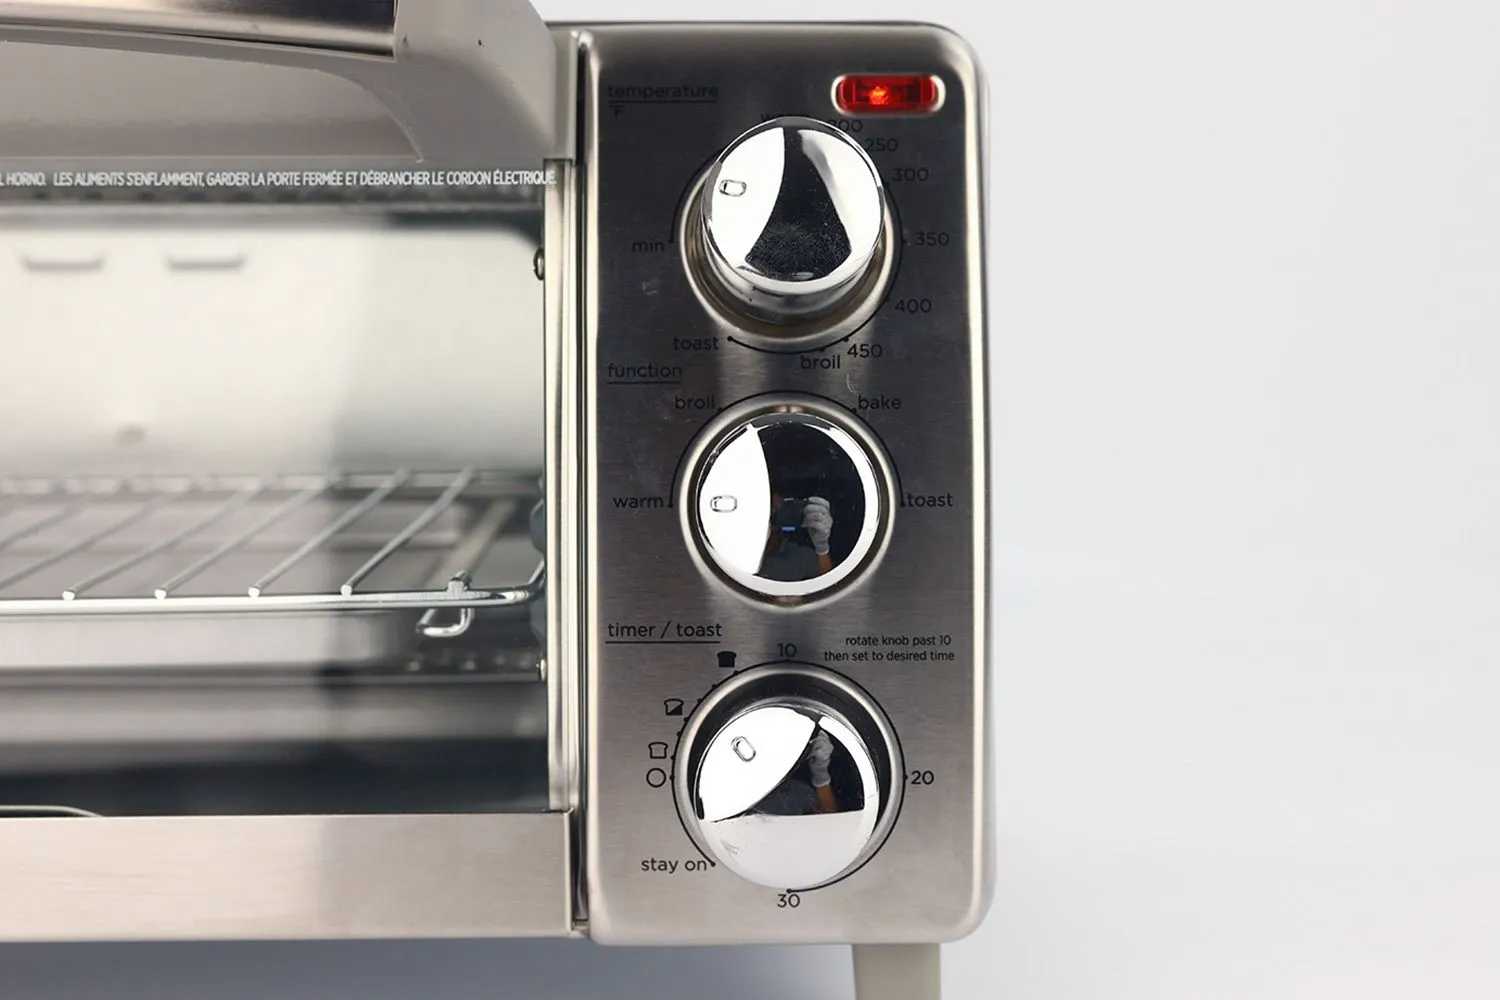 Black & Decker Natural Convection 4-Slice Toaster Oven FRONT LEFT